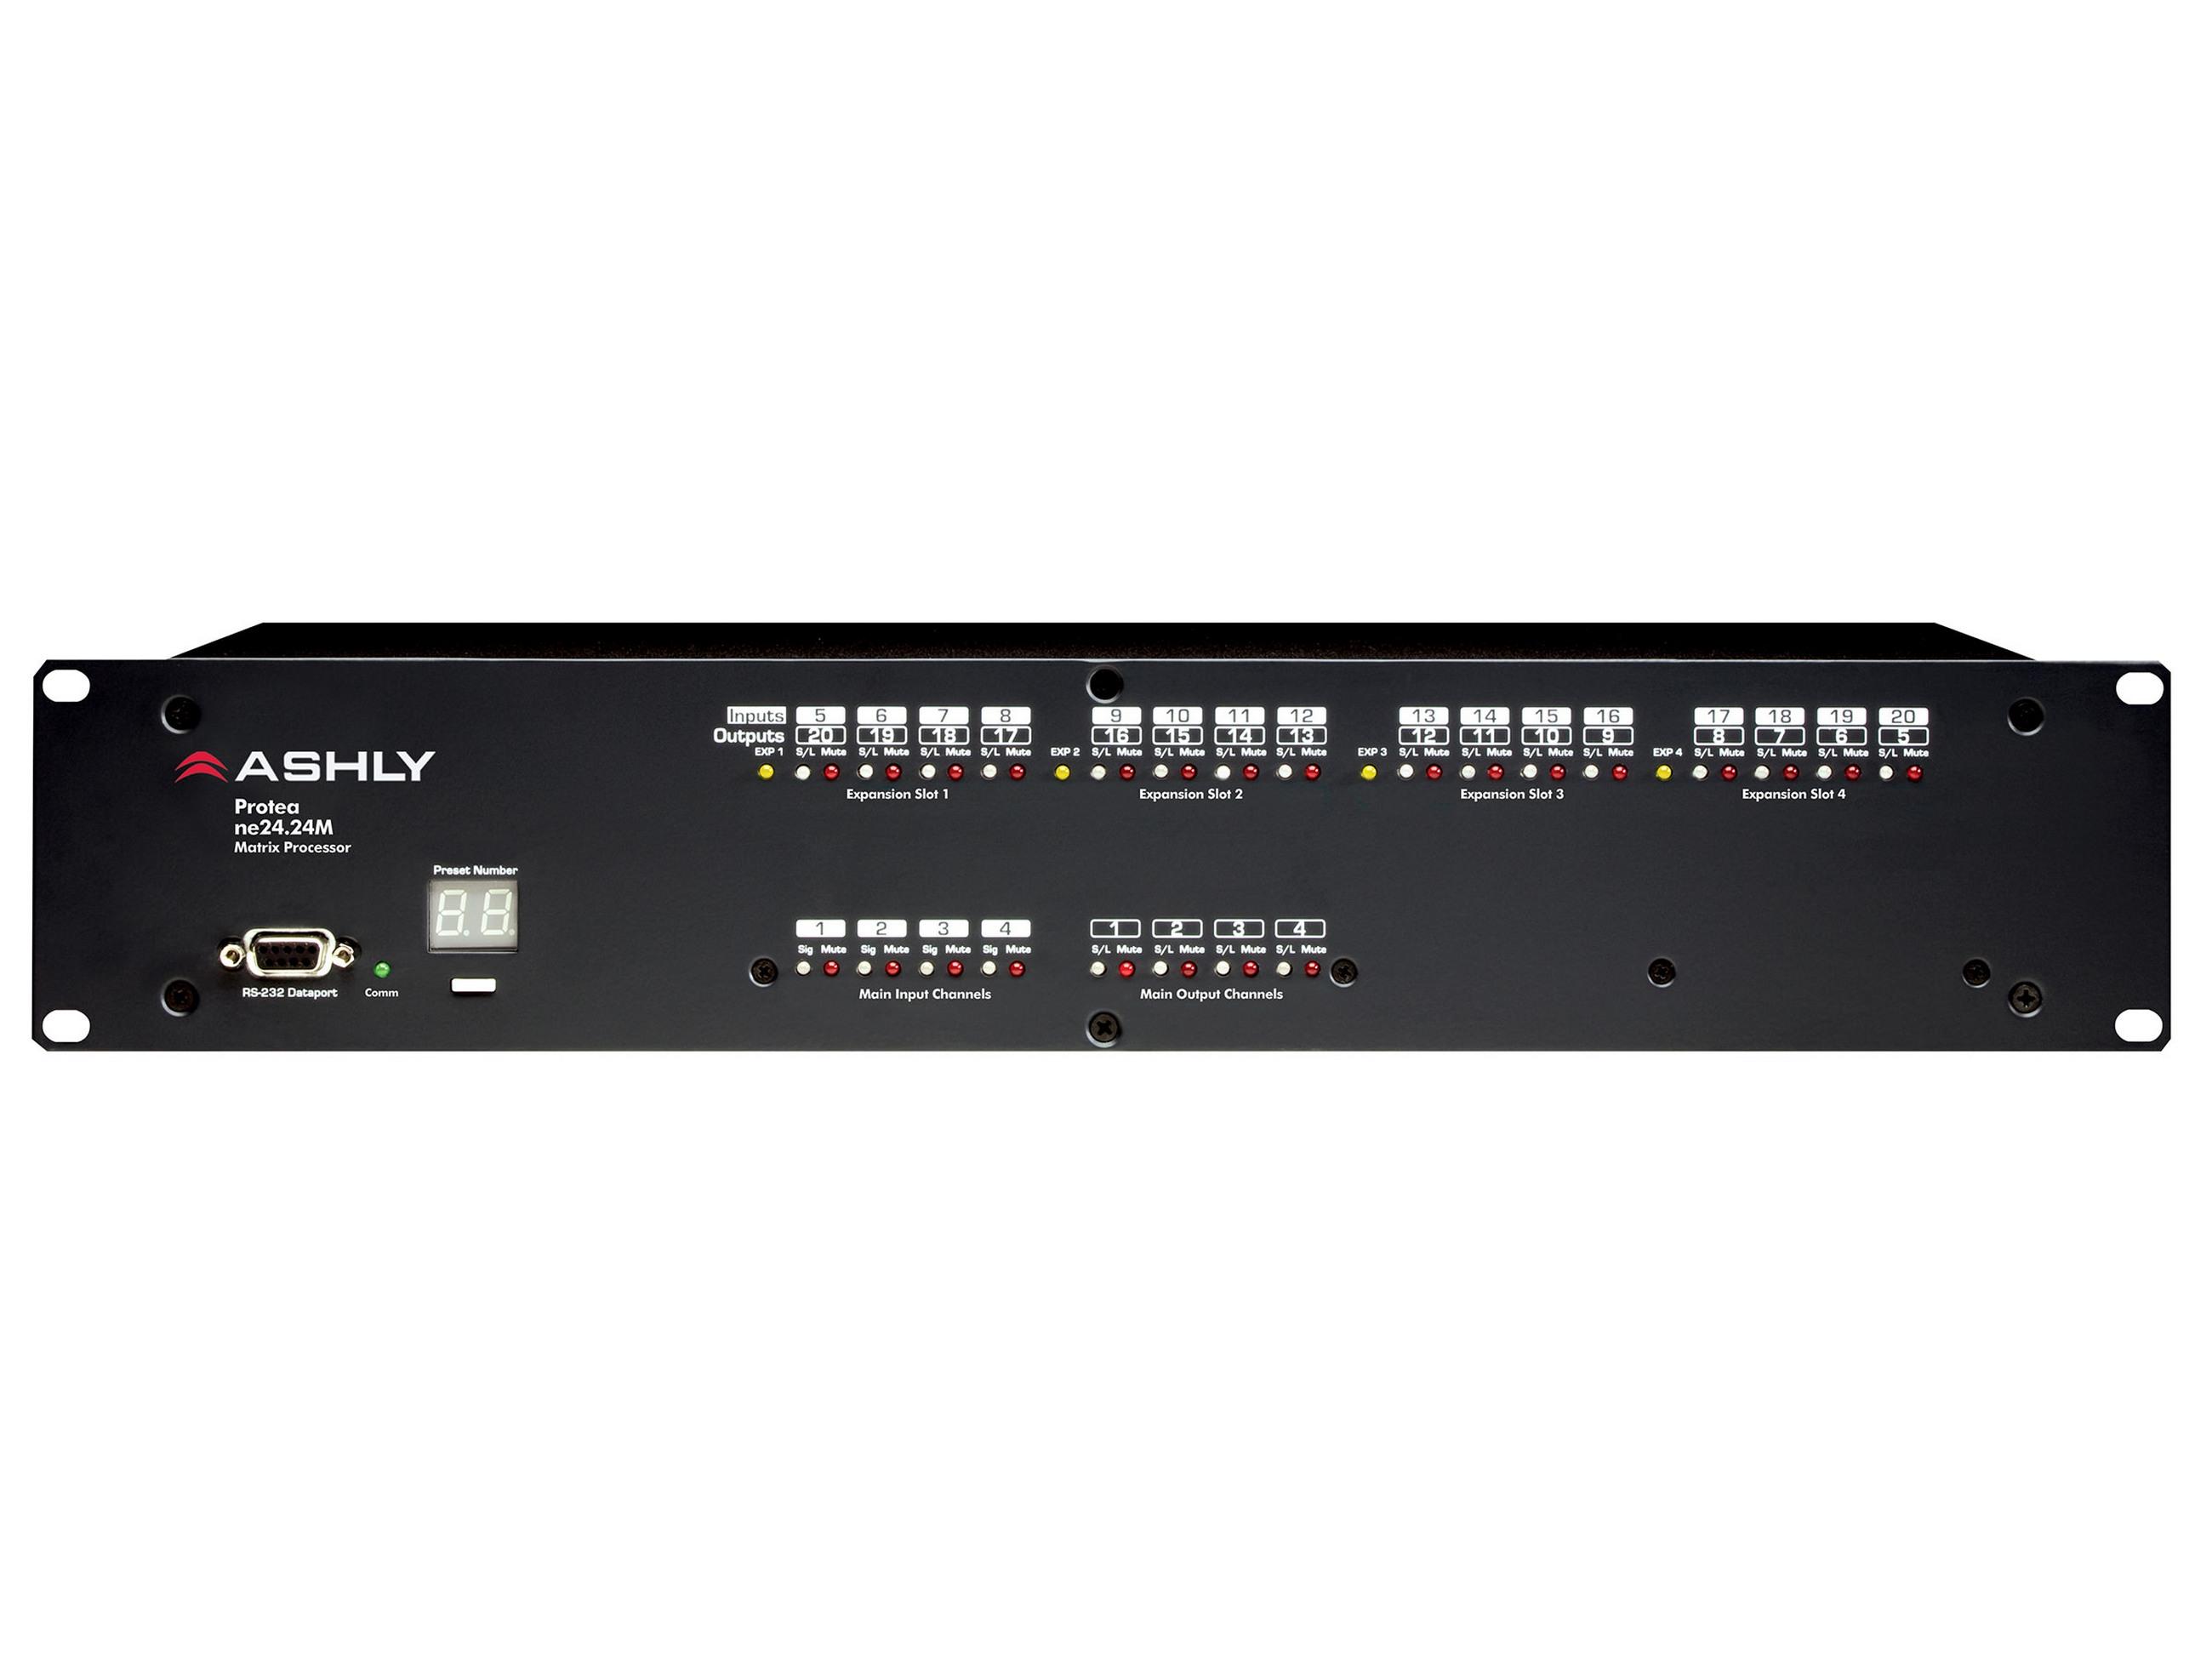 ne24.24M 8x8 8x8 Protea DSP Audio Matrix Switch/Processor by Ashly